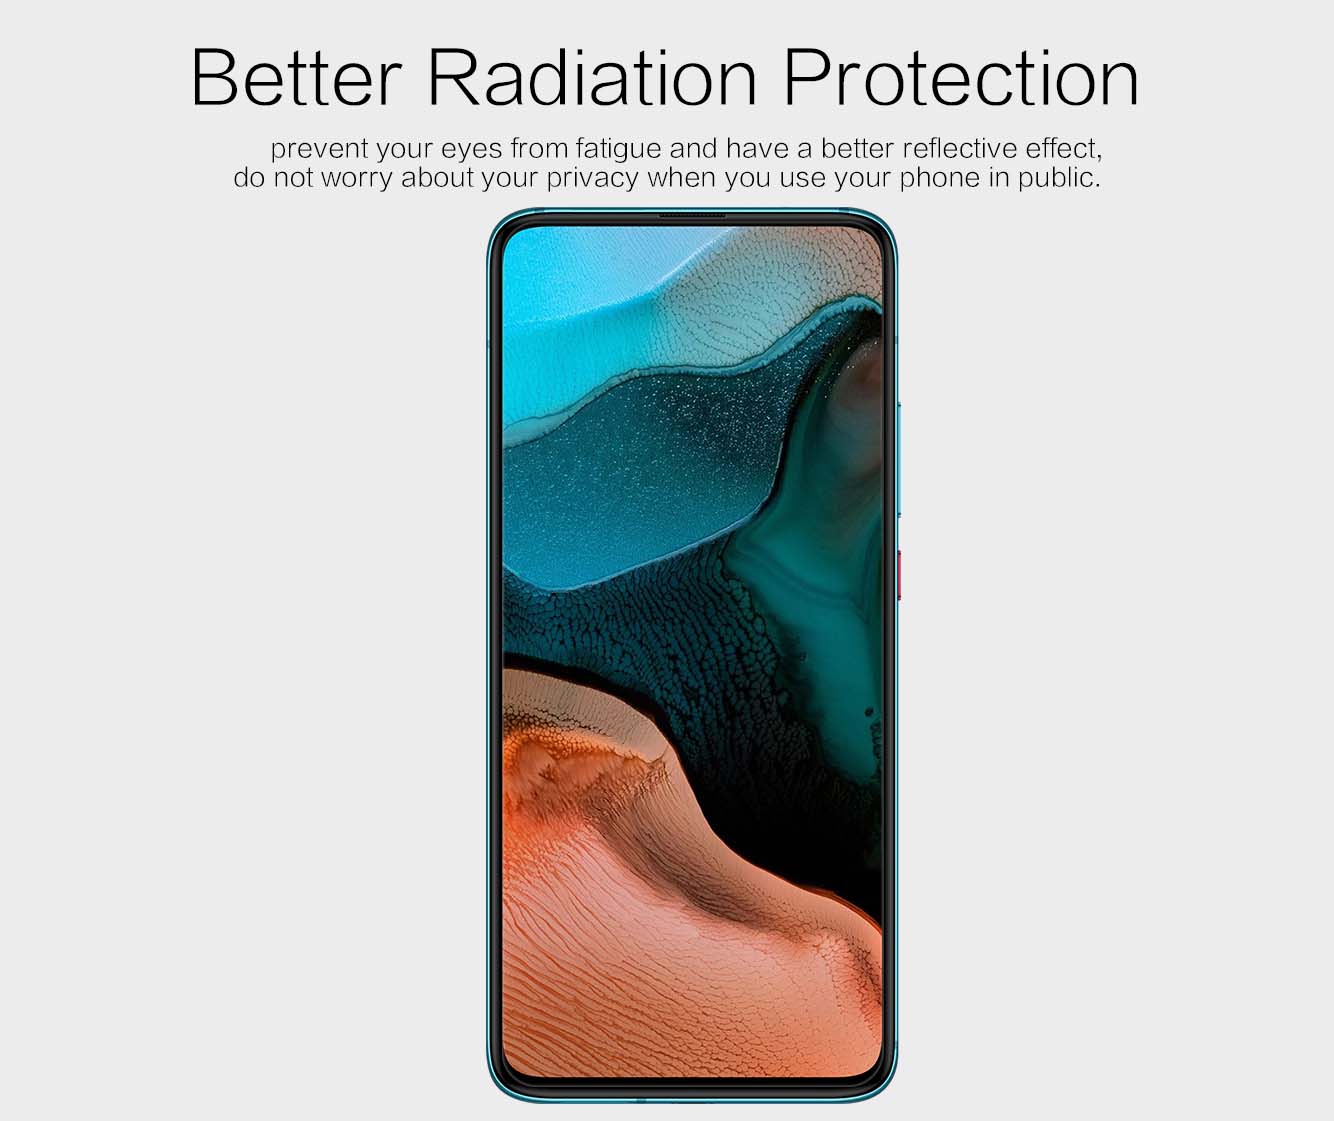 XIAOMI Redmi K30 Pro screen protector